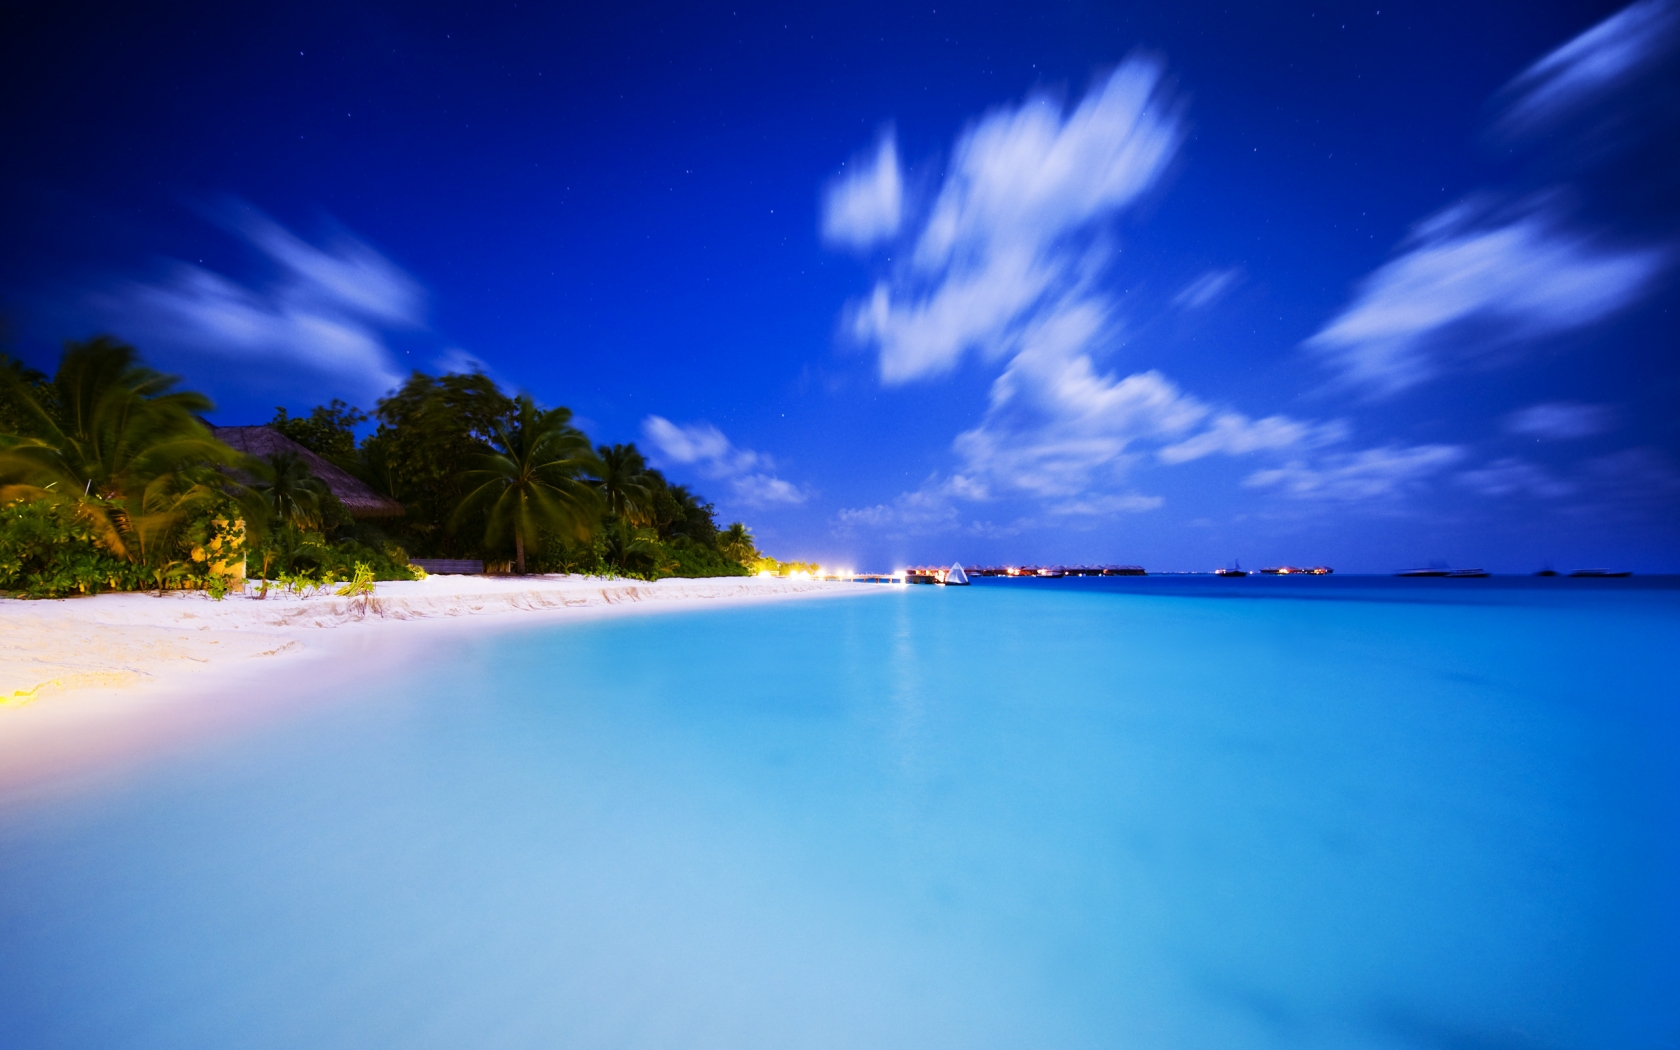 Maldivian Night for 1680 x 1050 widescreen resolution